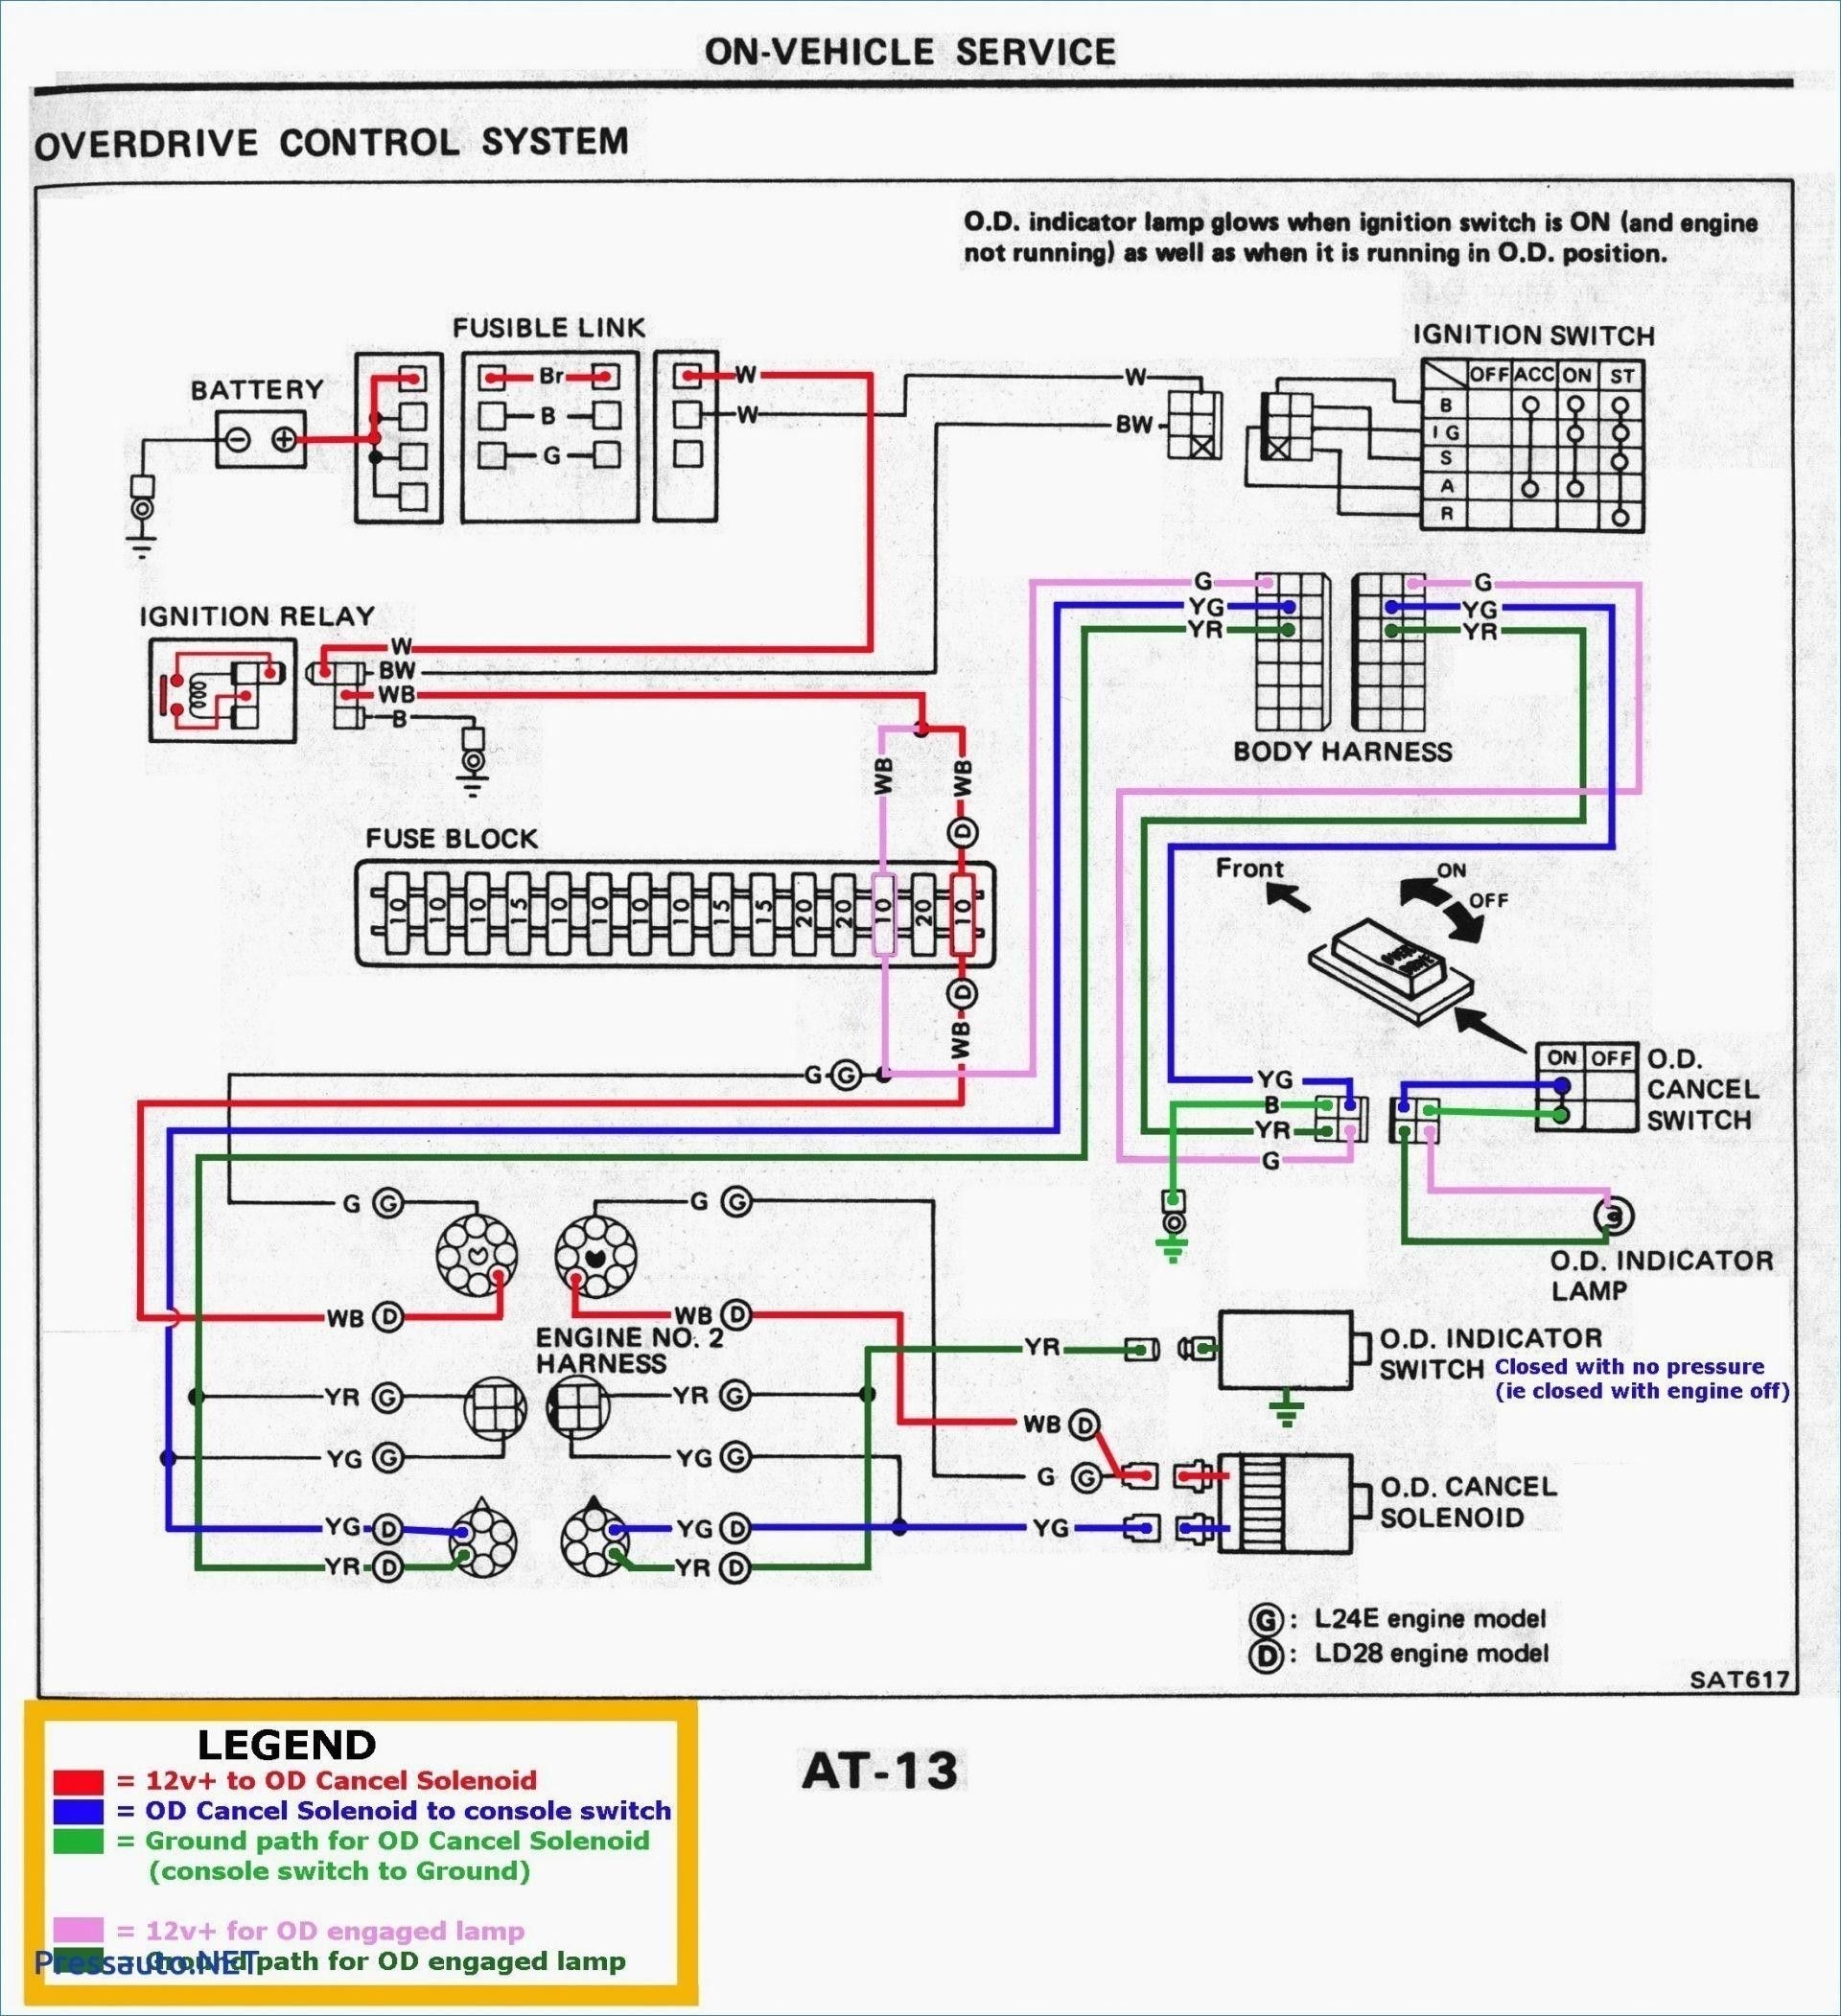 1996 Mercury Sable Engine Diagram 96 Ram 1500 Engine Diagram Wiring Diagram Paper Of 1996 Mercury Sable Engine Diagram